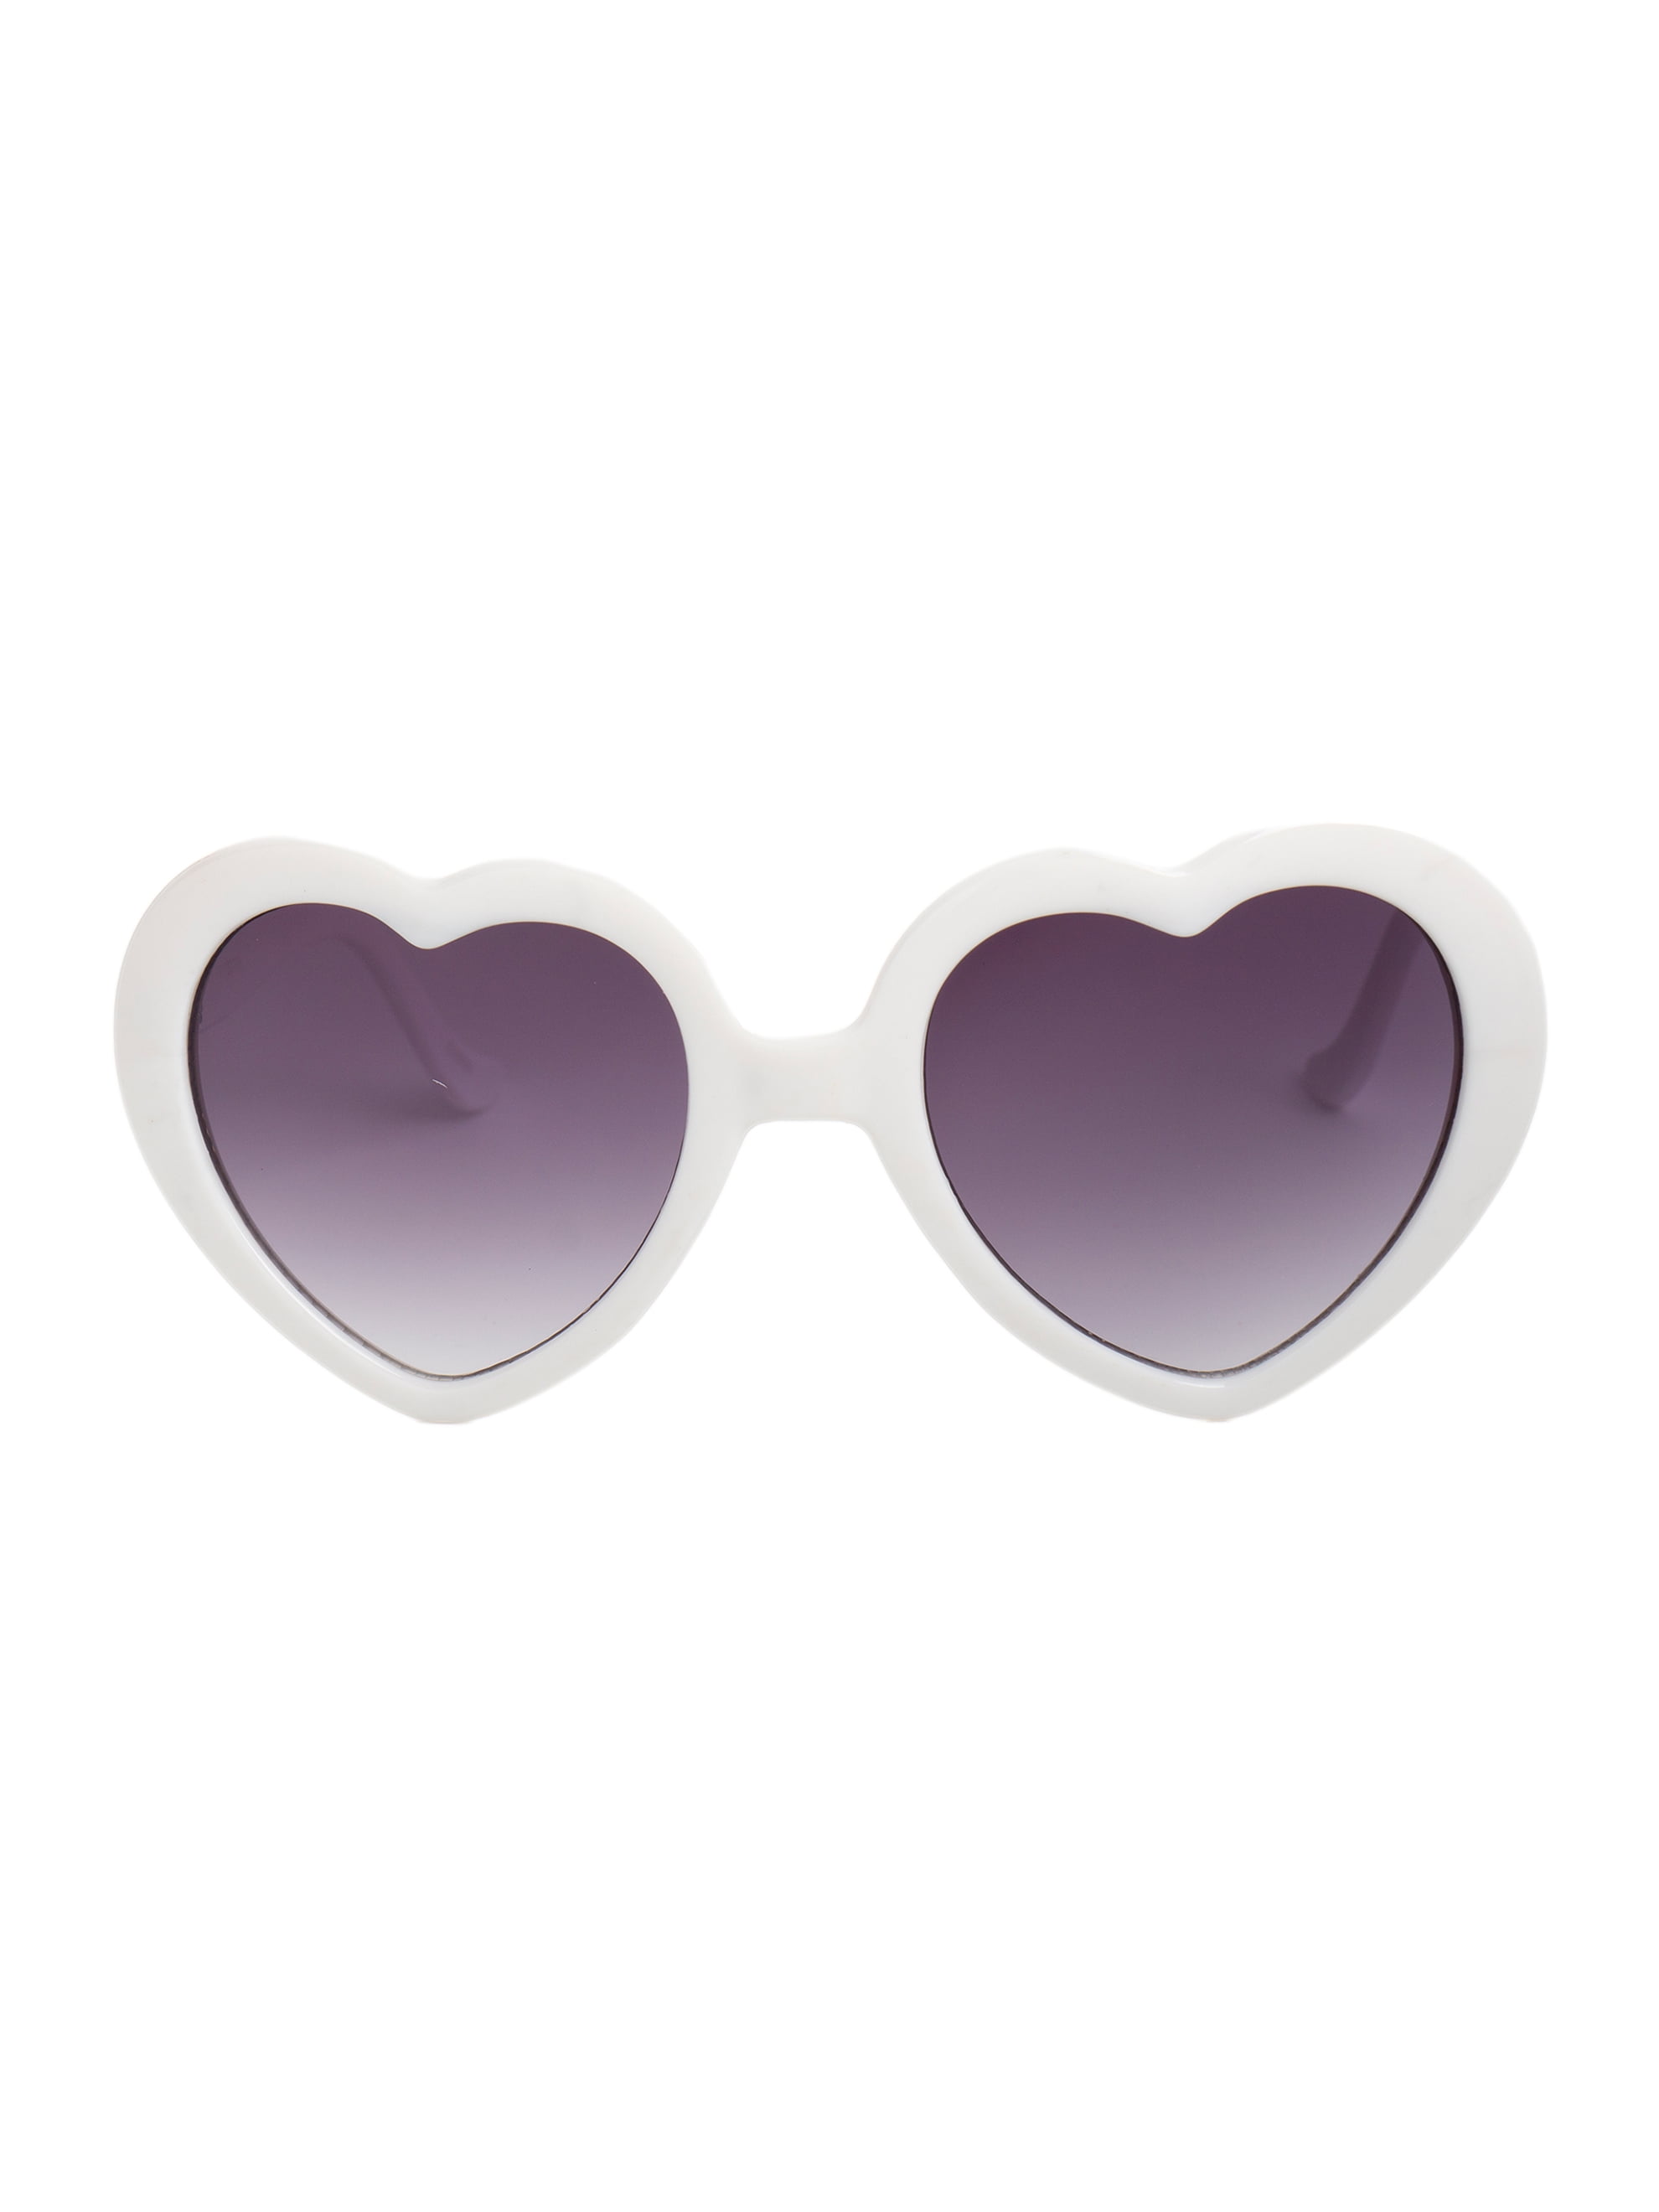 Hot Women Girl Oversized Heart-Shaped Frame Eyewear Shades Glasses  Sunglasses | eBay